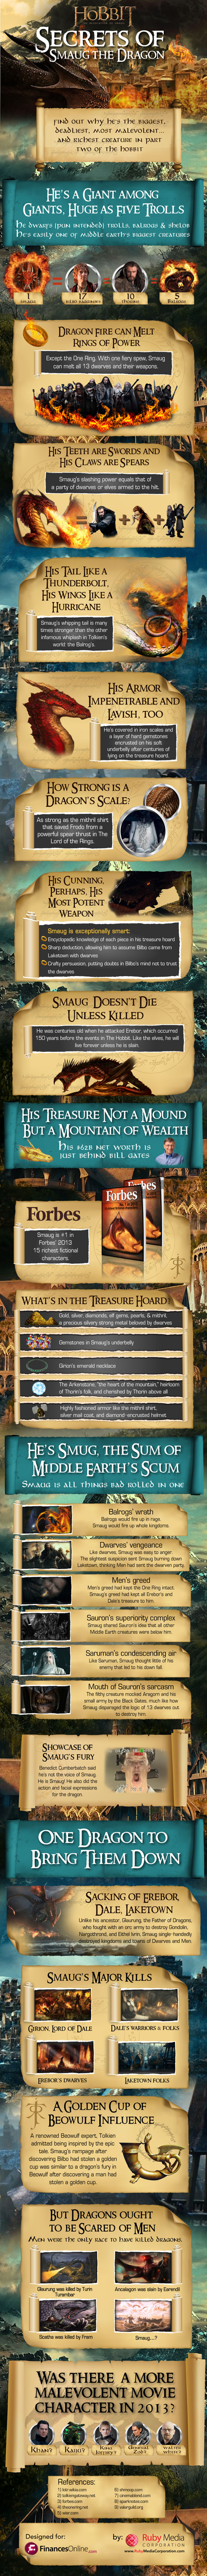 hobbit-infographic